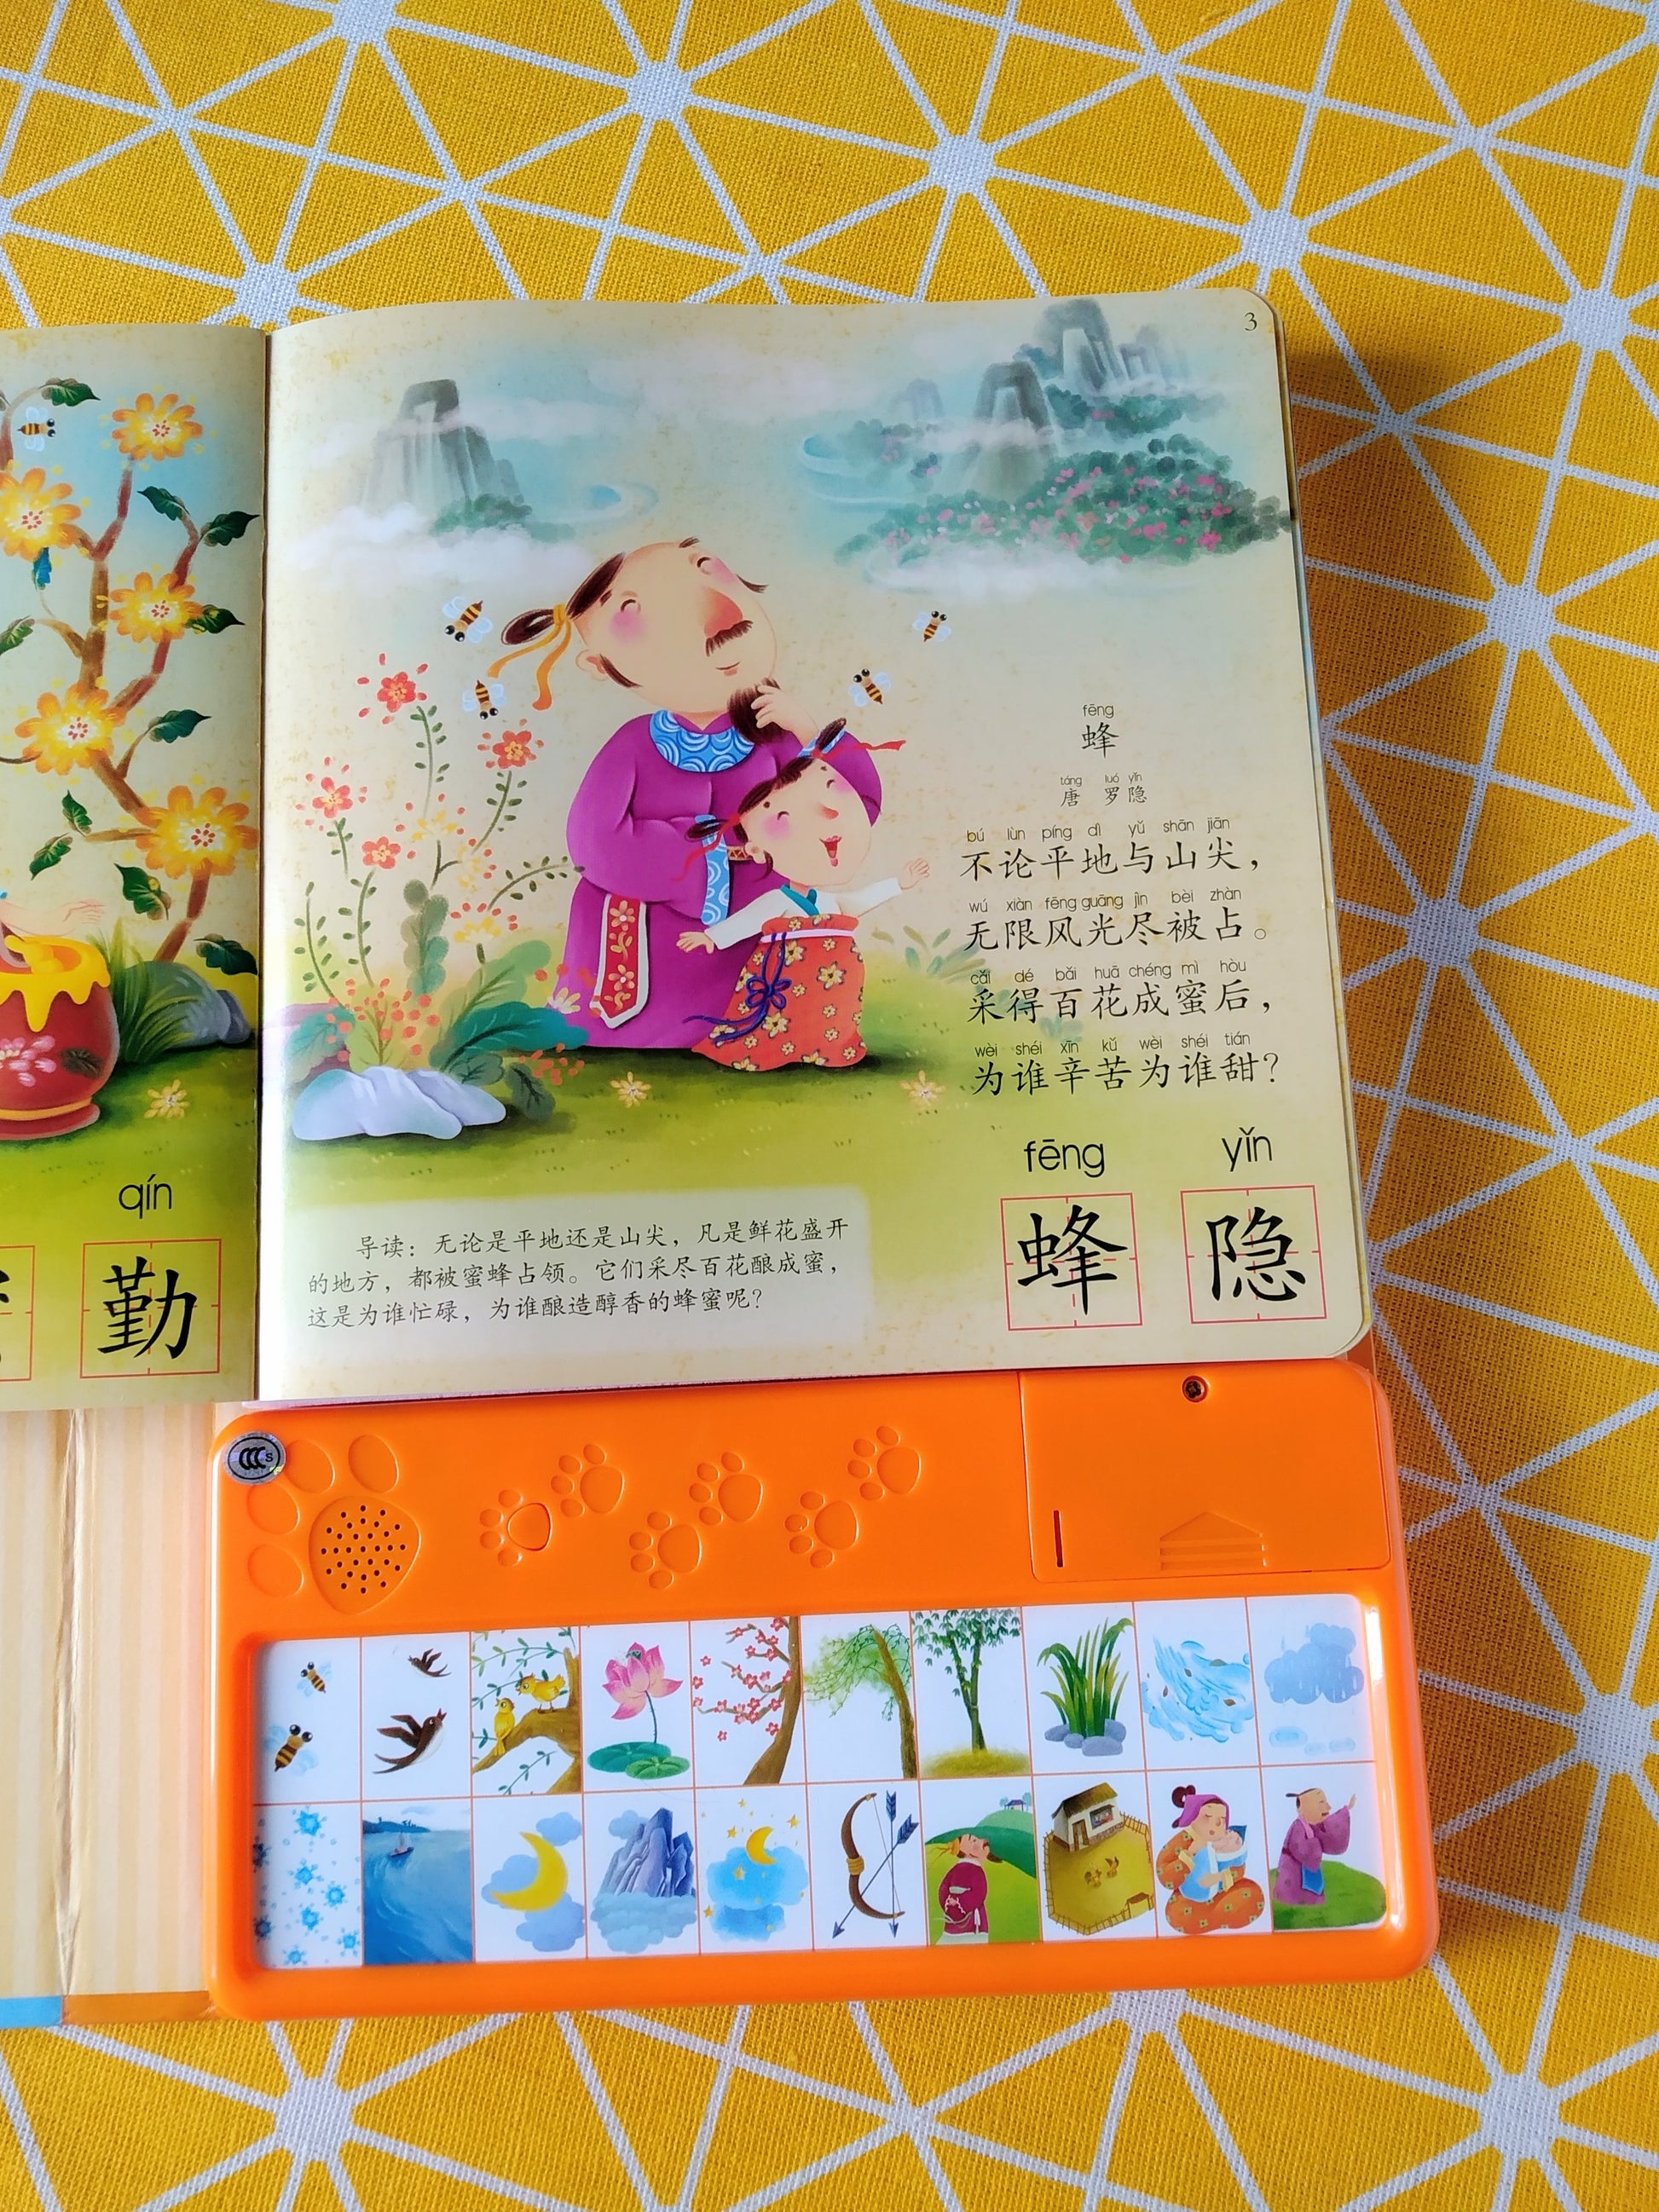 我会读古诗 I Can Recite Chinese Poems Soundbook